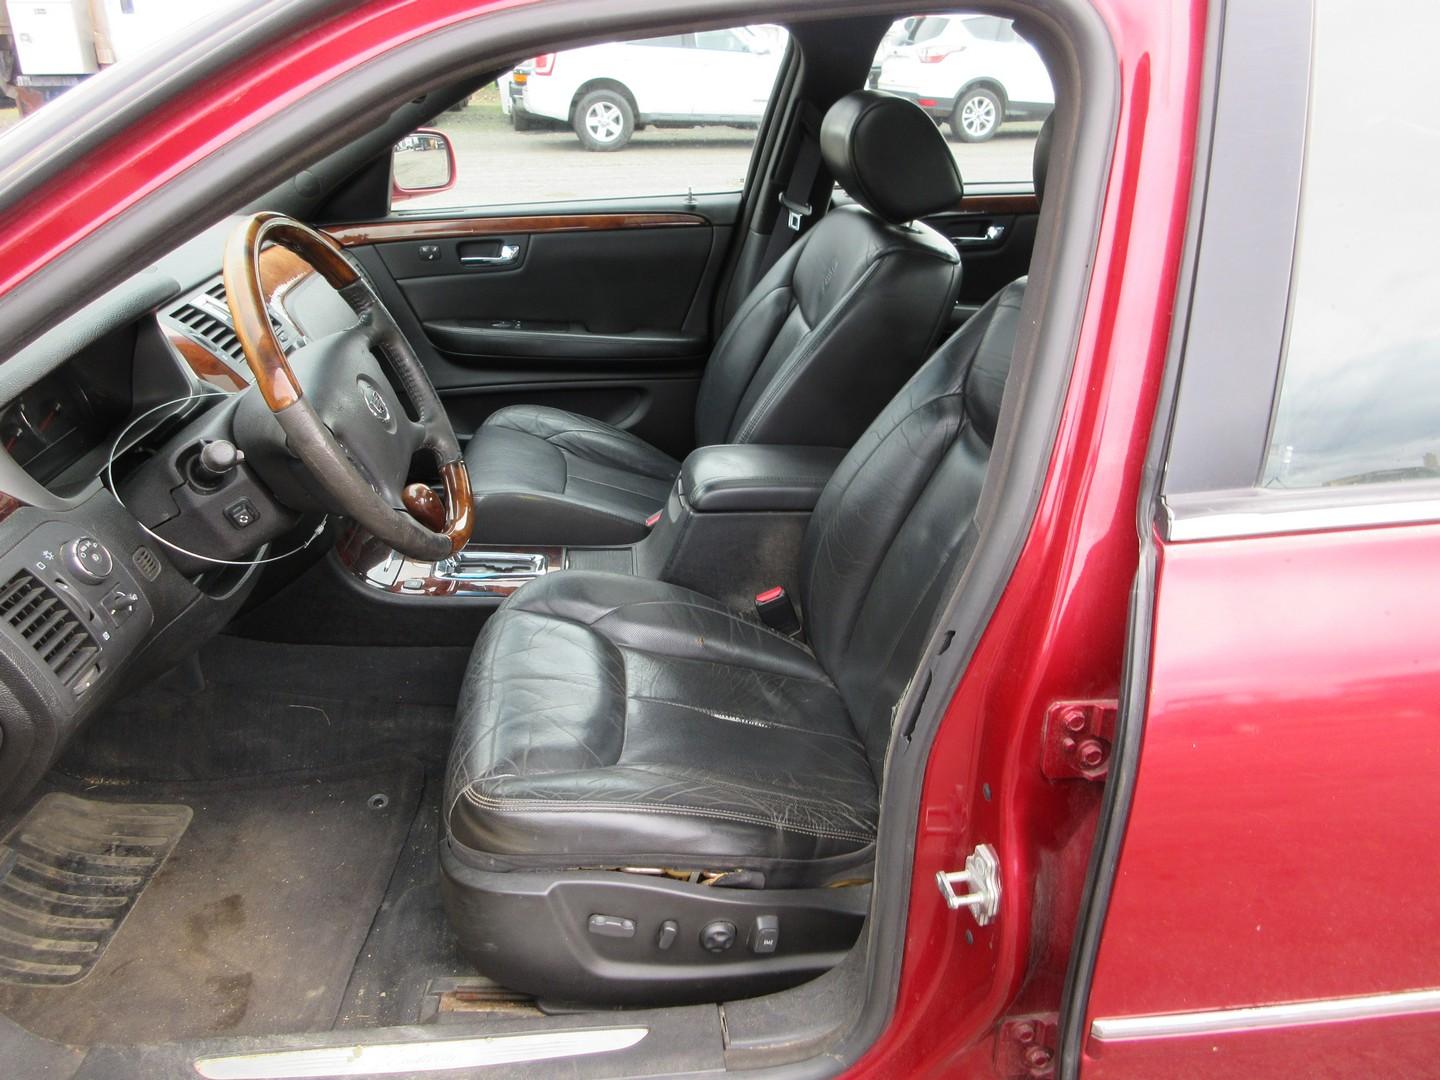 2006 Cadillac DTS 4 Door Sedan